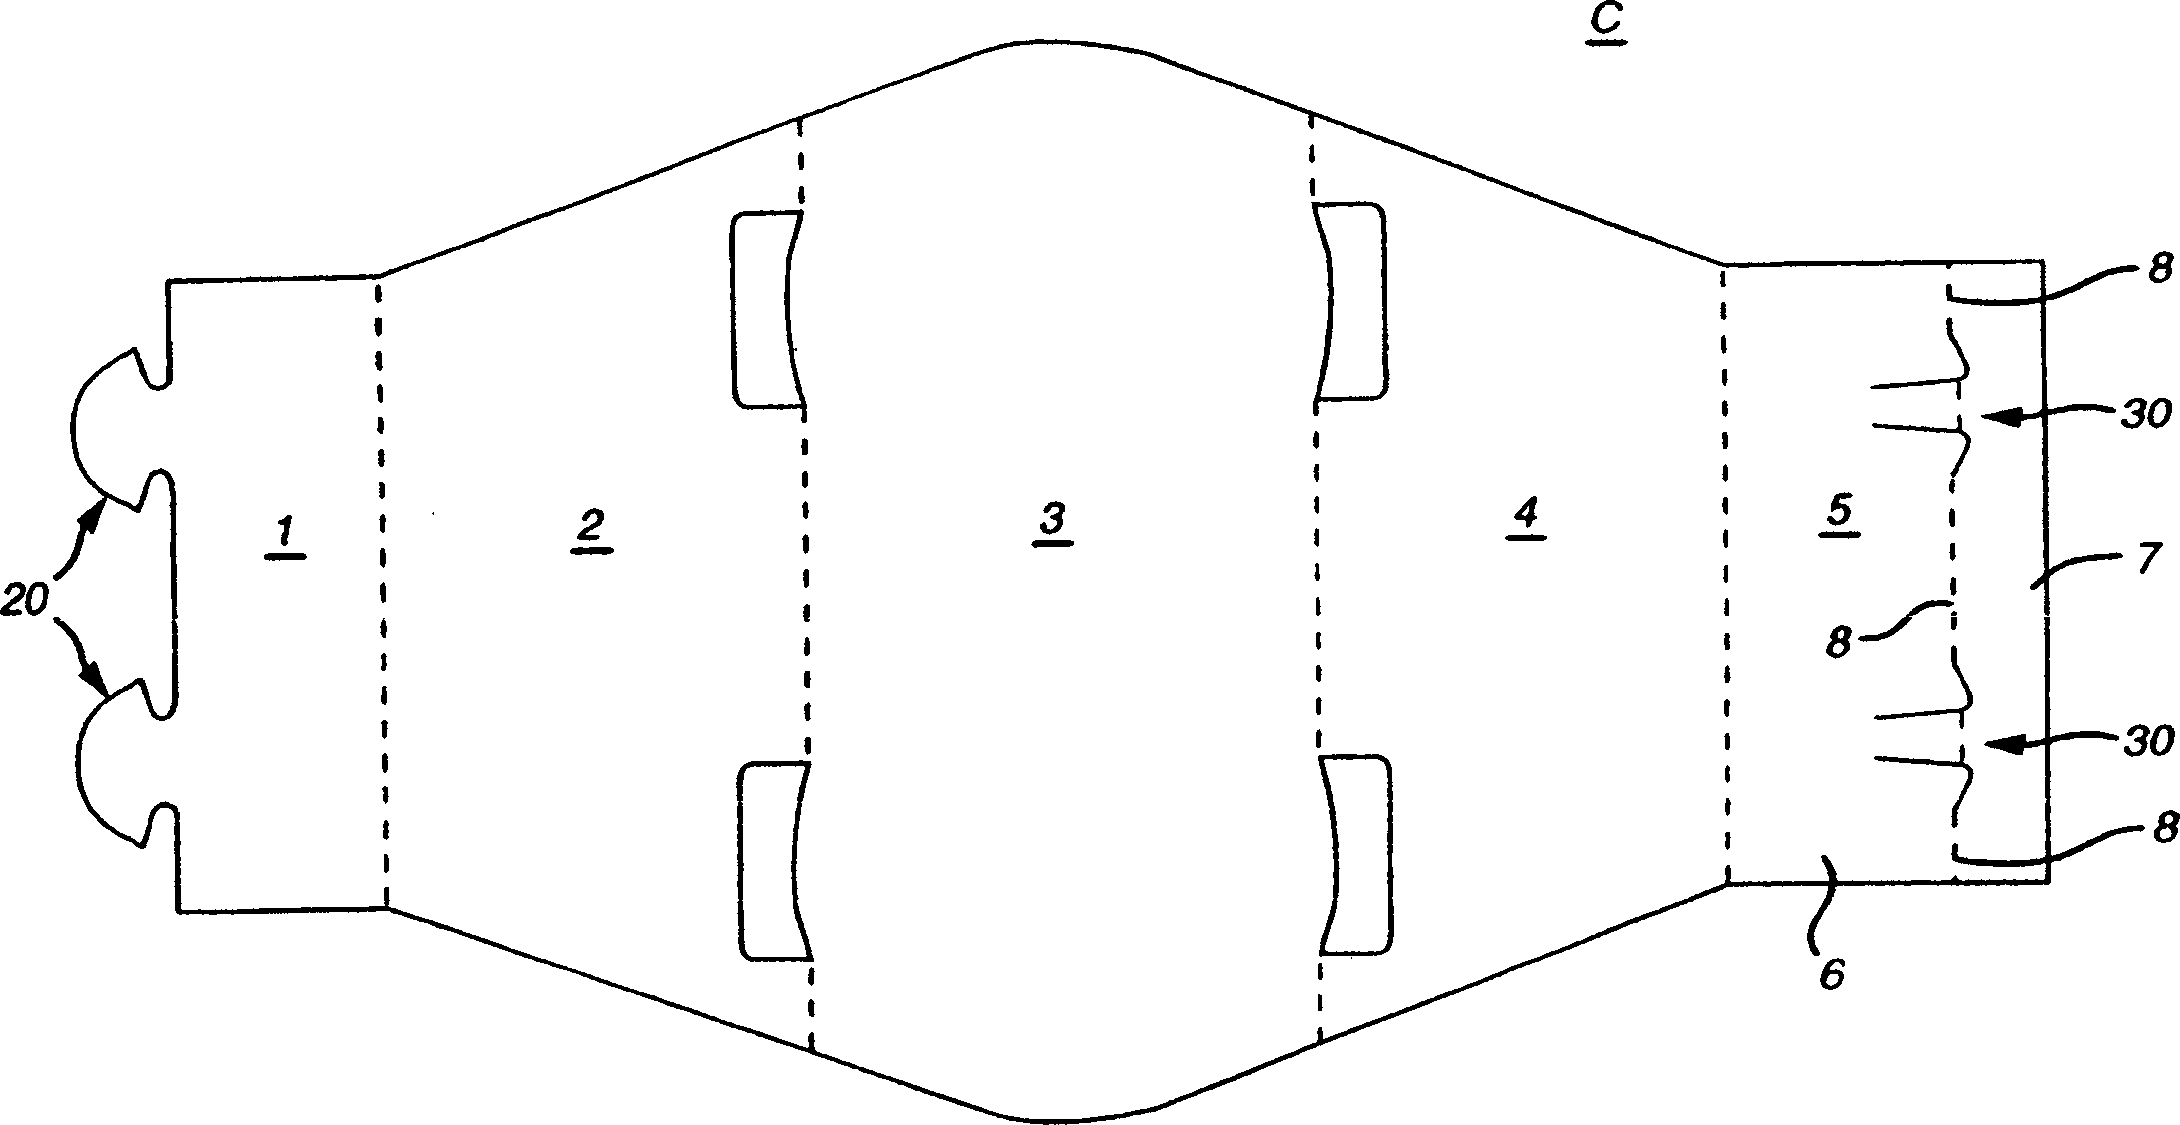 Locking arrangement for panels